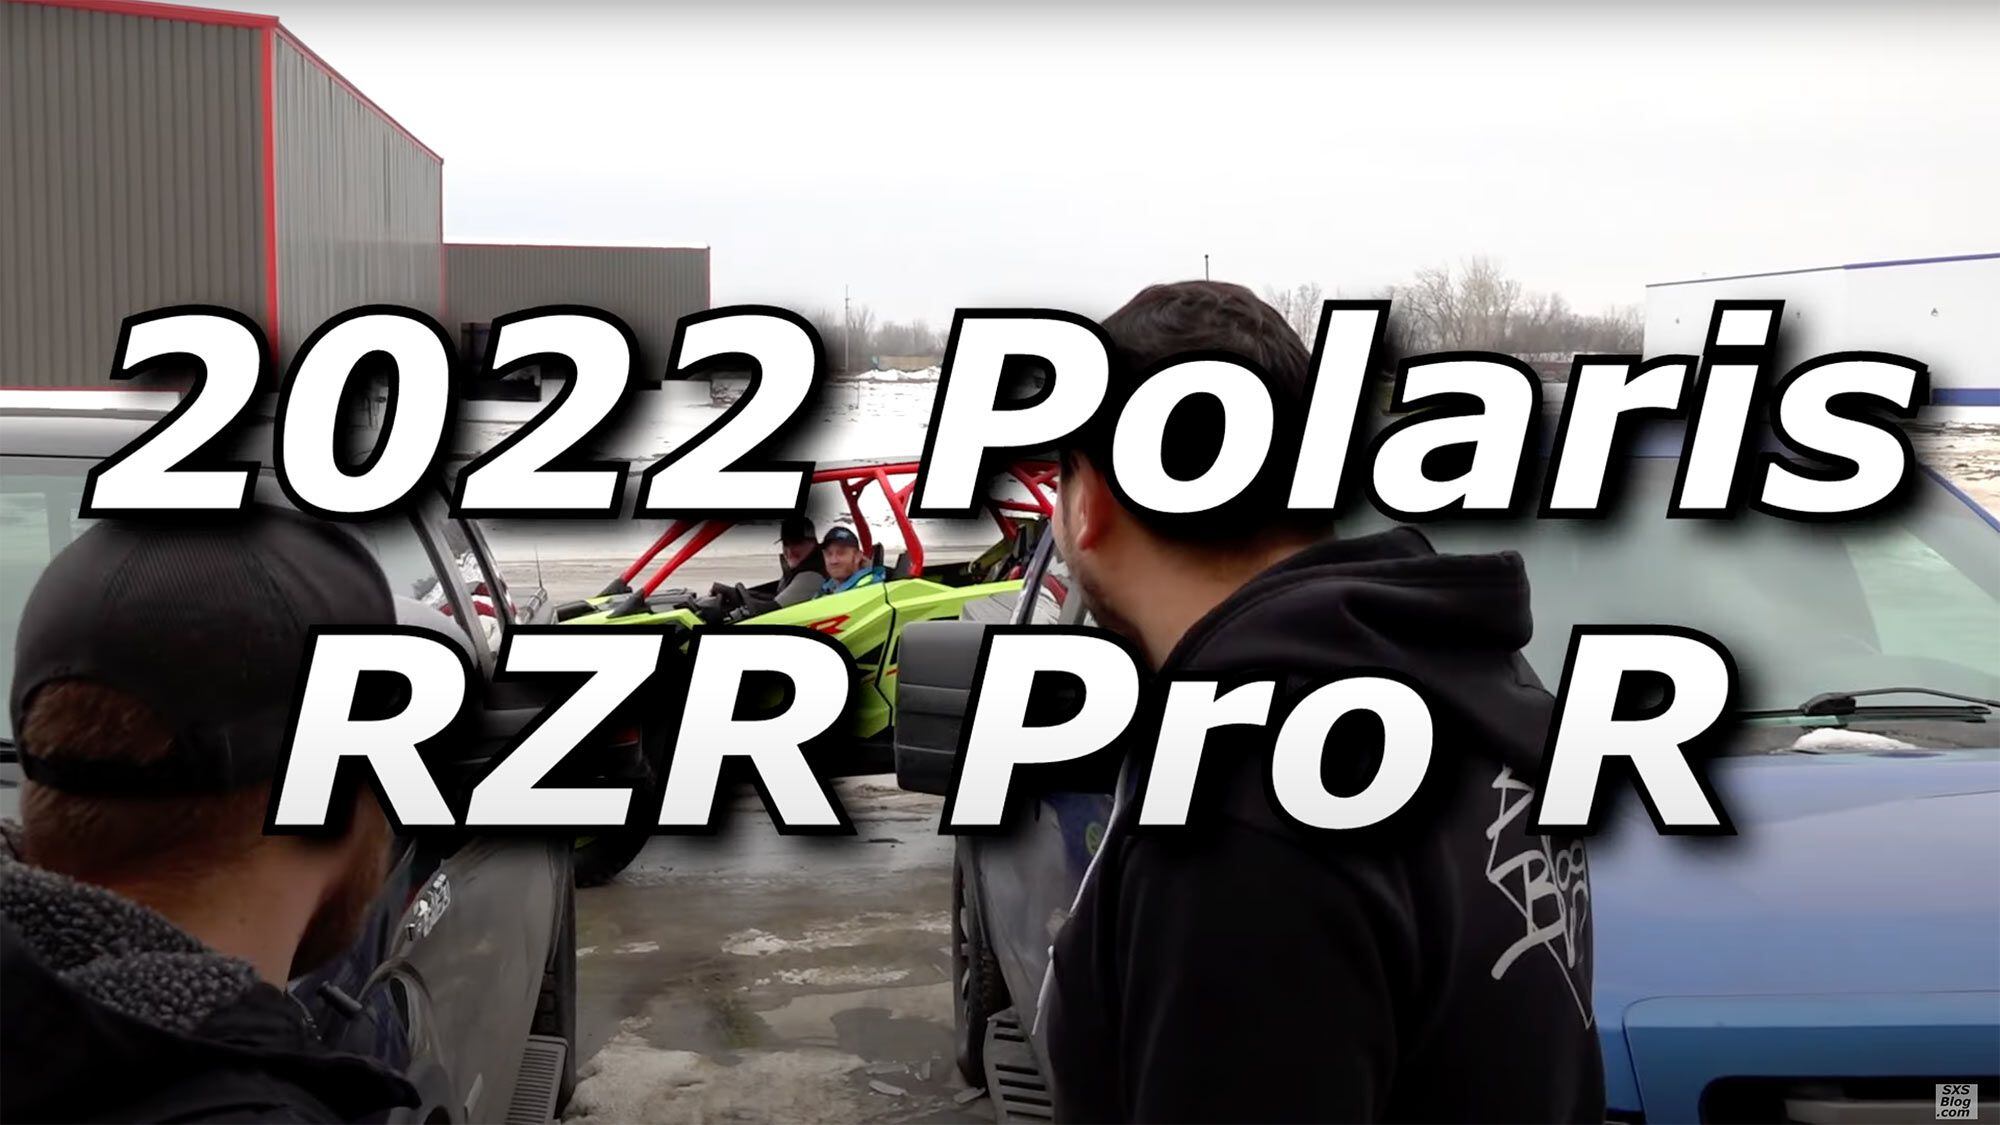 SXSBlog.com brings home an all new 2022 Polaris RZR Pro R.